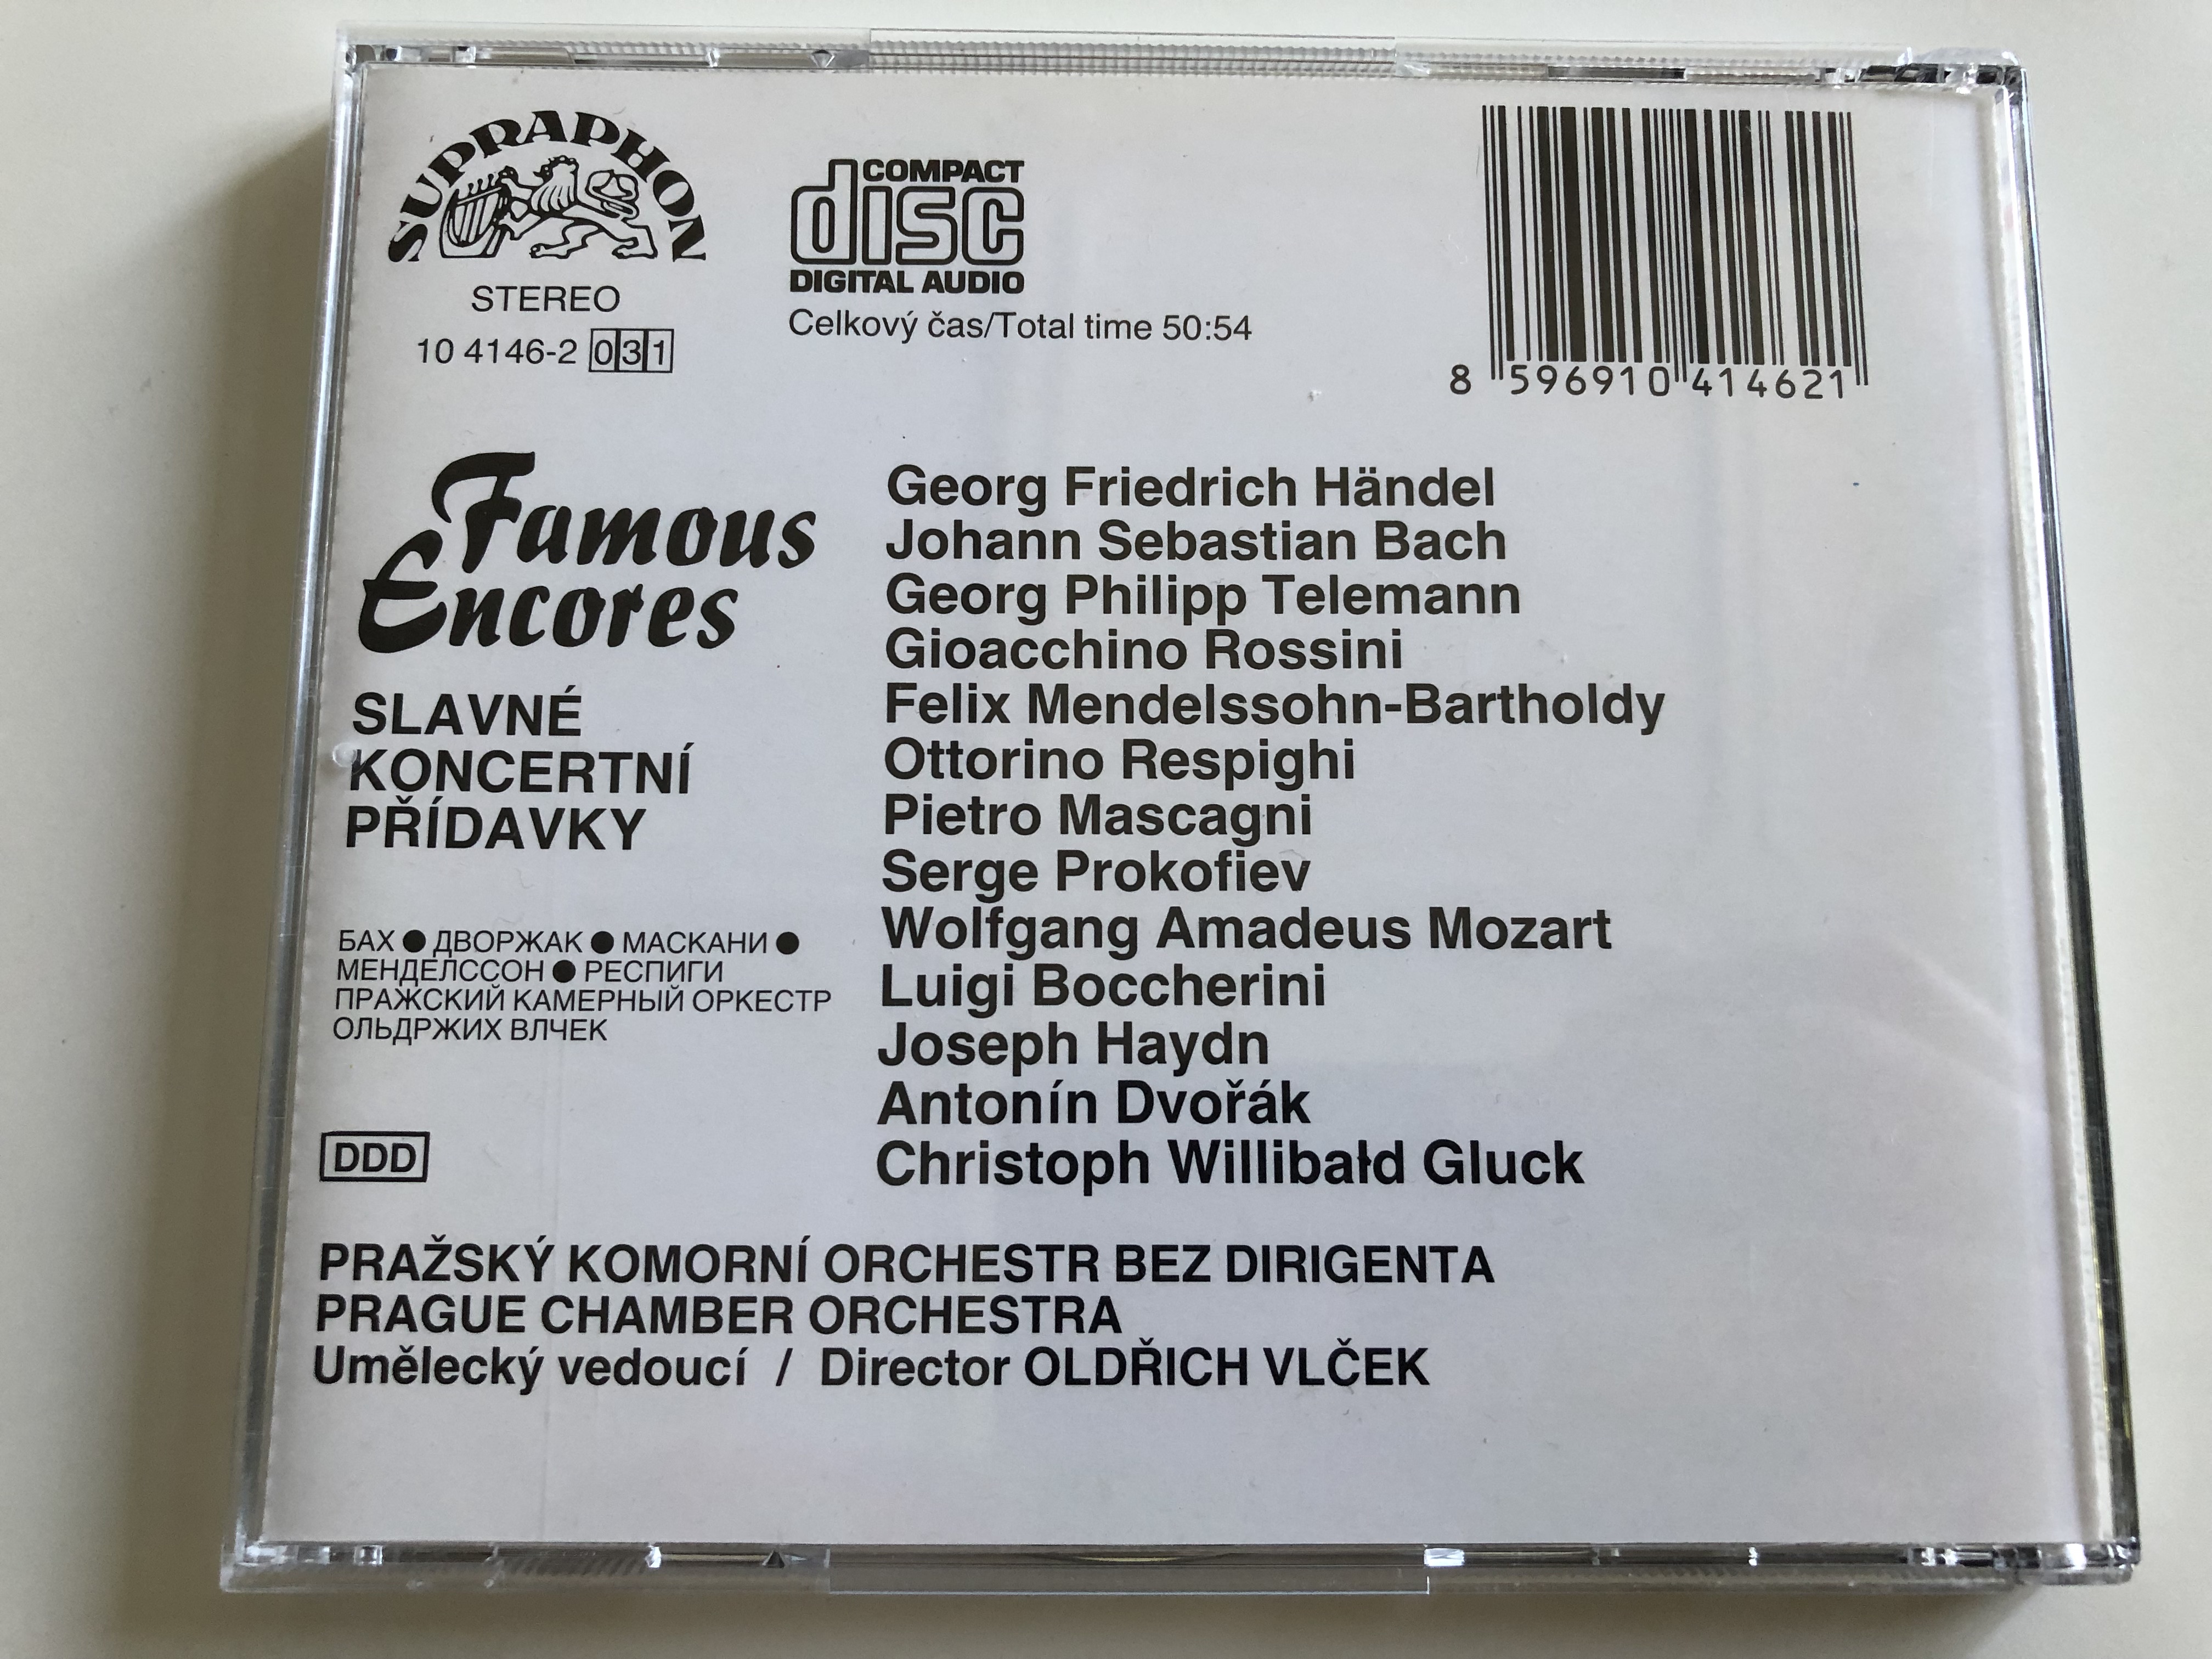 famous-encores-bach-air-dvorak-humoreque-mascagni-intermezzo-mendelssohn-saltarello-prague-chamber-orchestra-conducted-by-oldrich-vicek-audio-cd-1986-supraphon-6-.jpg